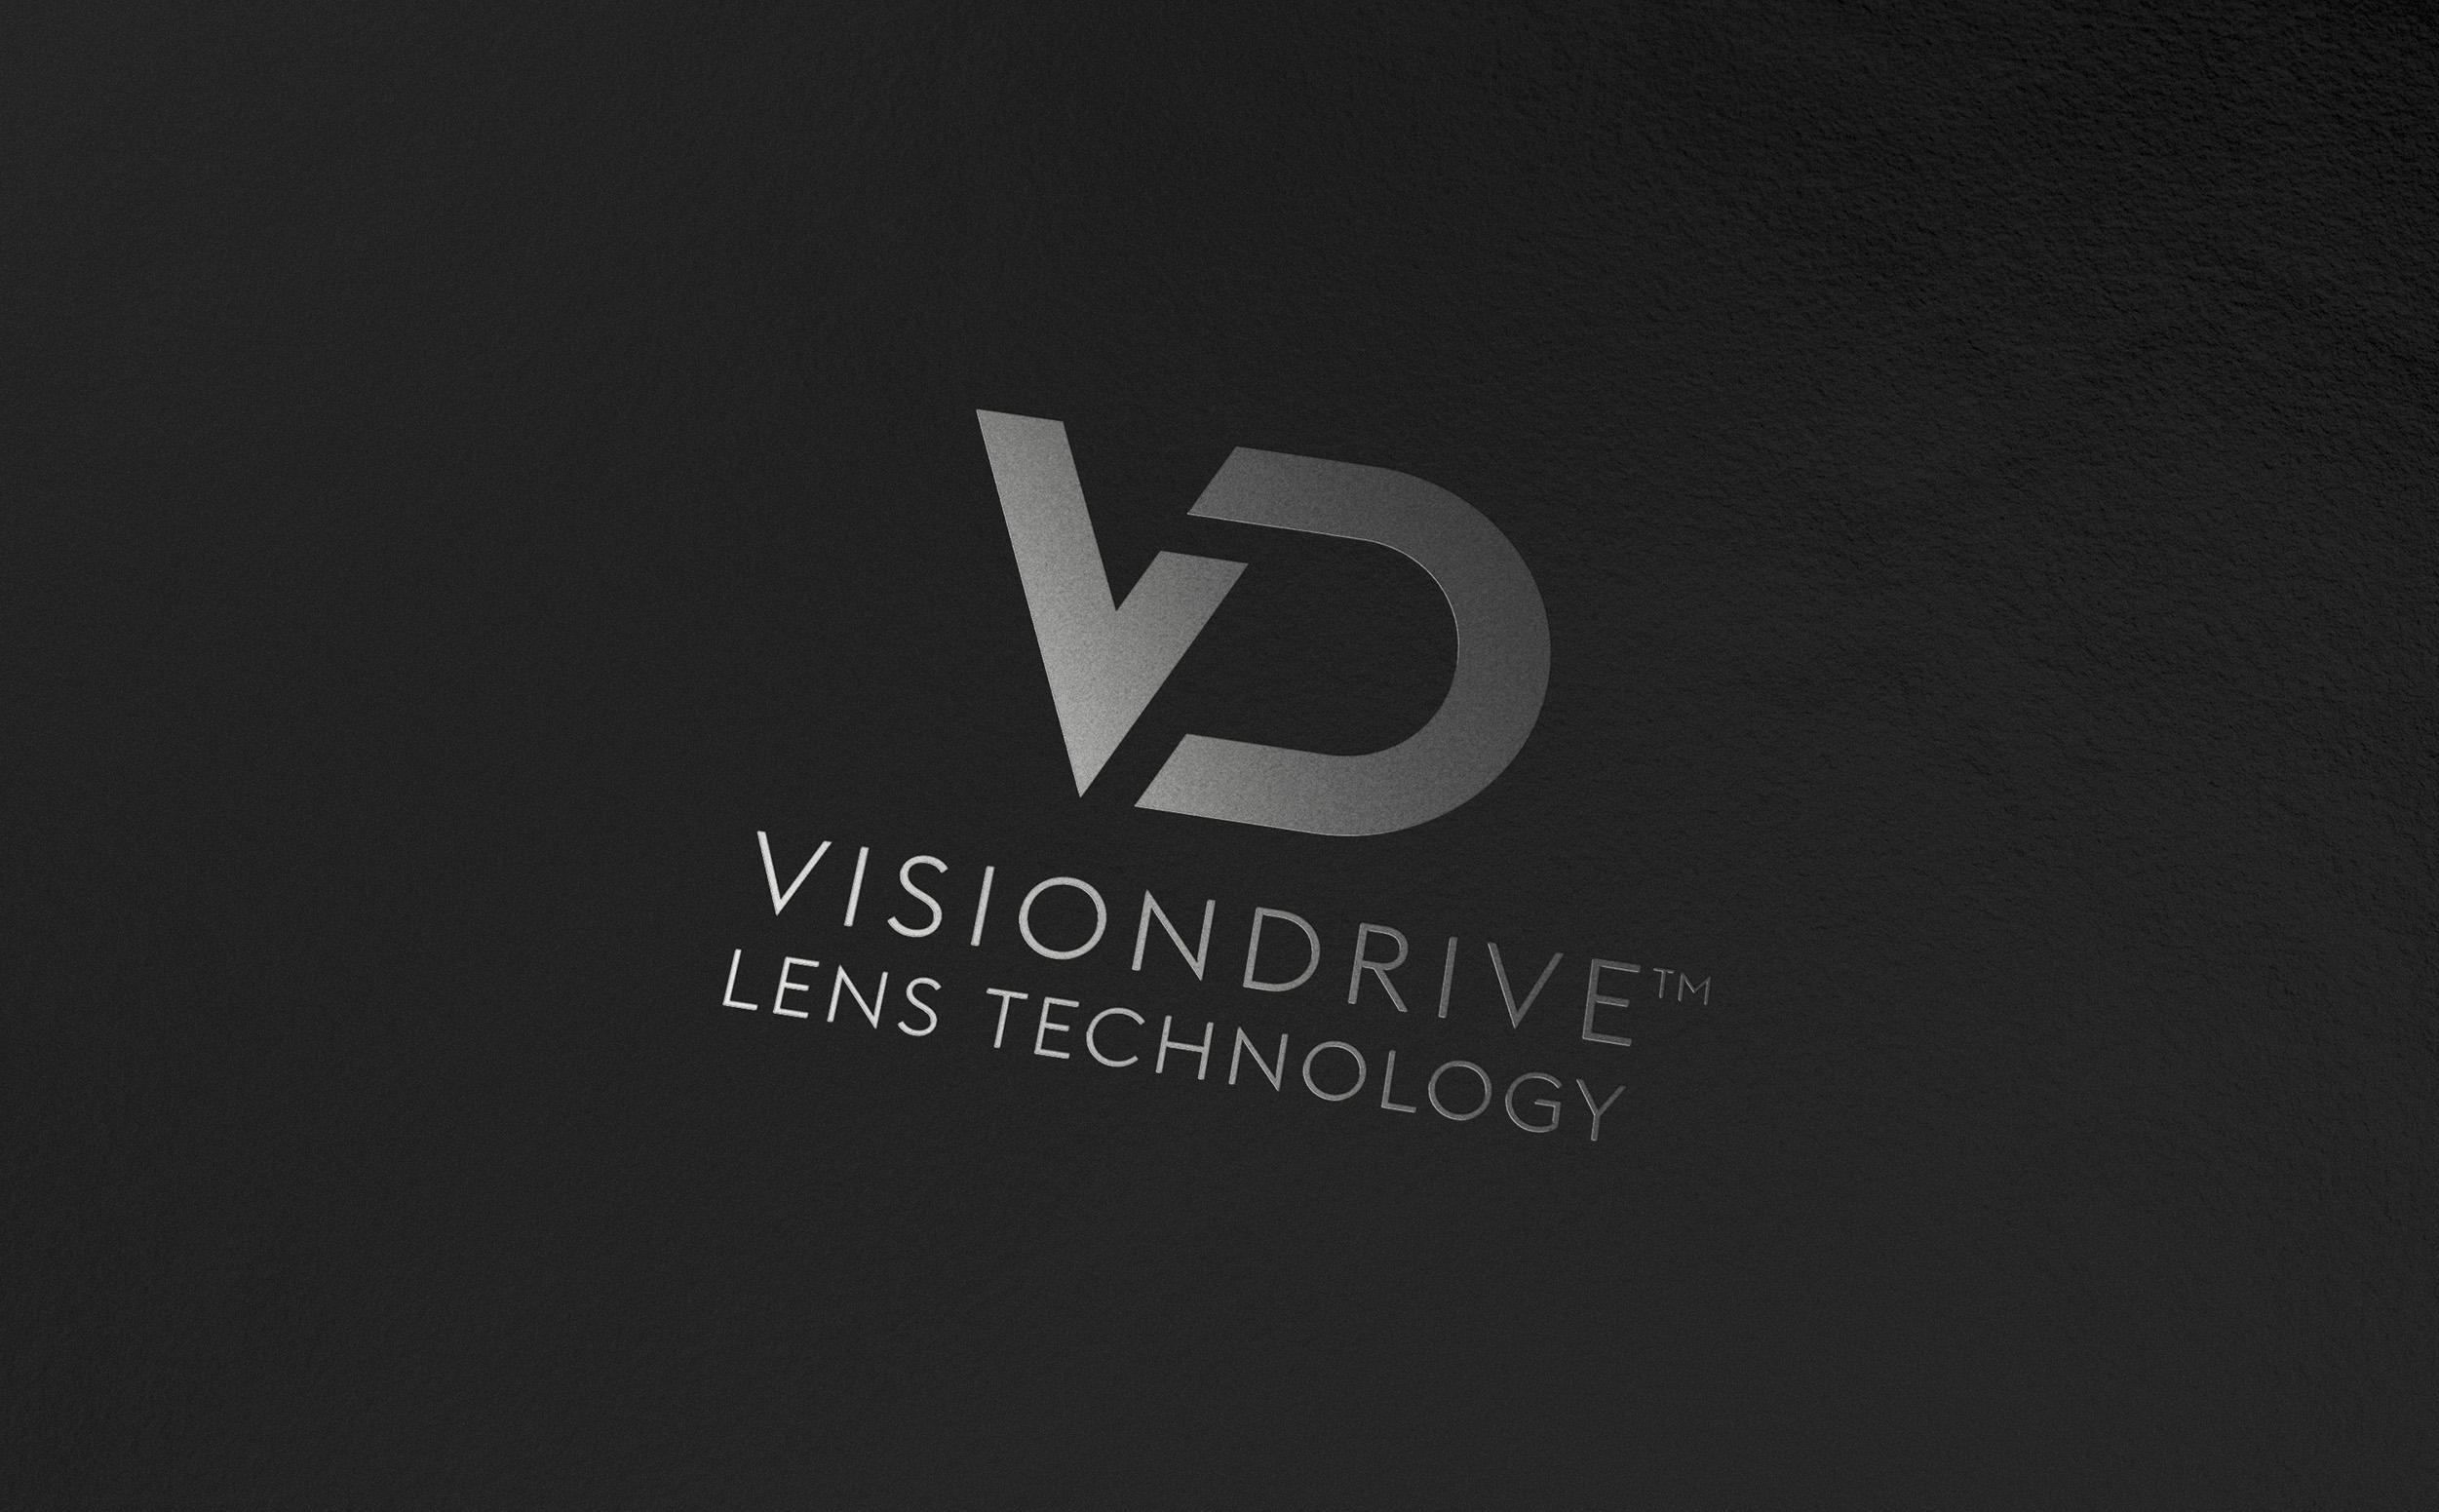 2030-vision-drive-lens-technology-logo-2